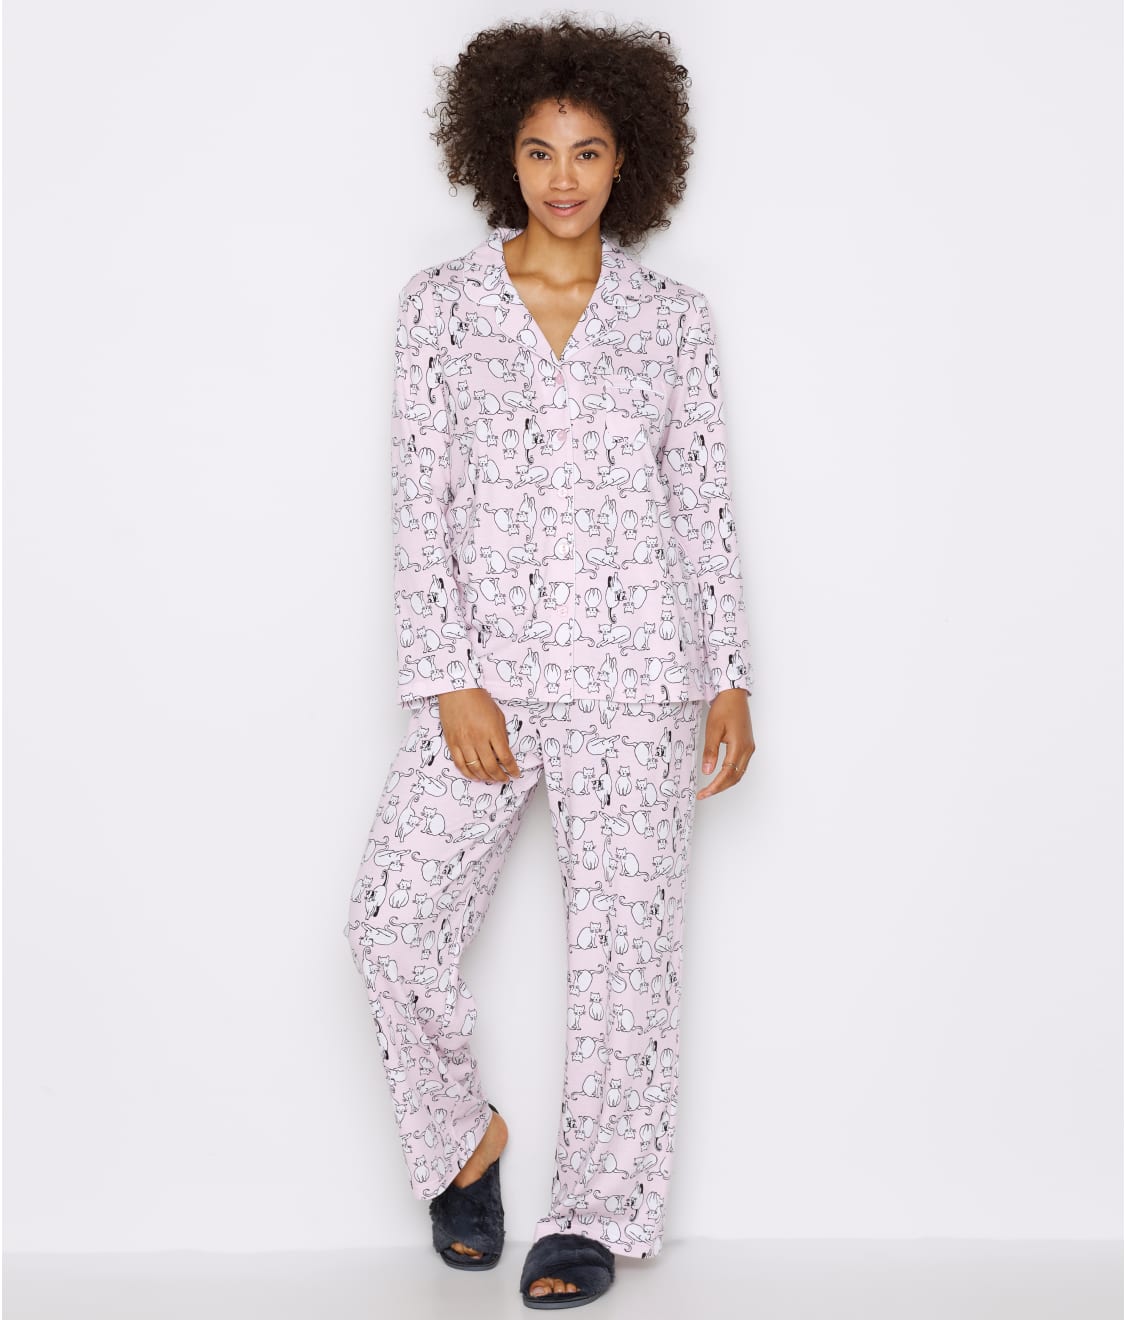 Karen Neuburger Plus Size Girlfriend Knit Pajama Set & Reviews